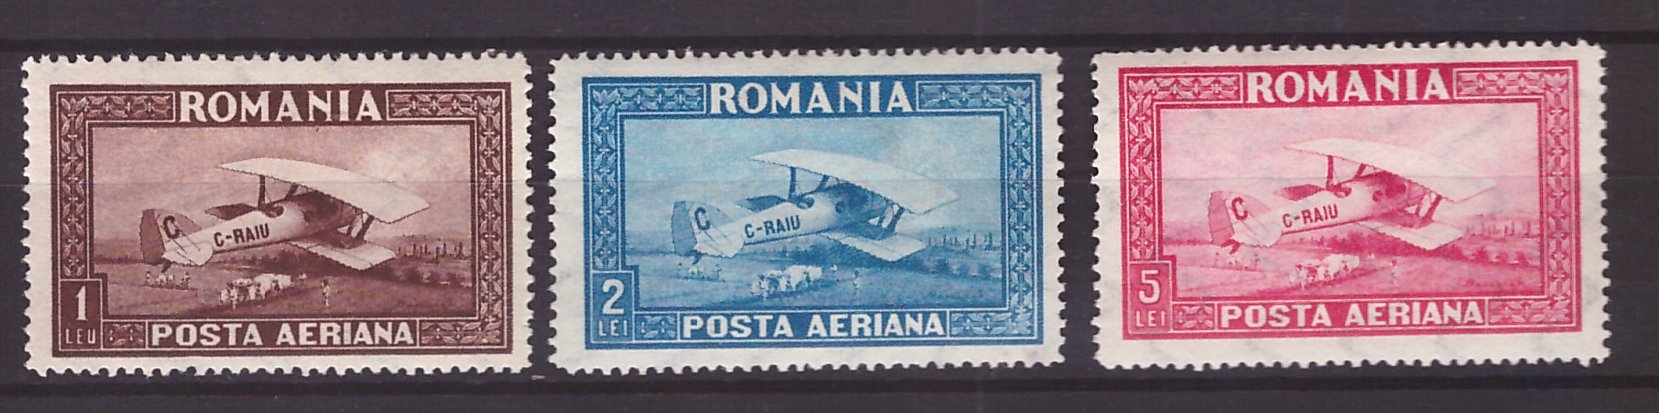 1928 - Posta Aeriana C-RAIU fil.vertical serie nestampilata